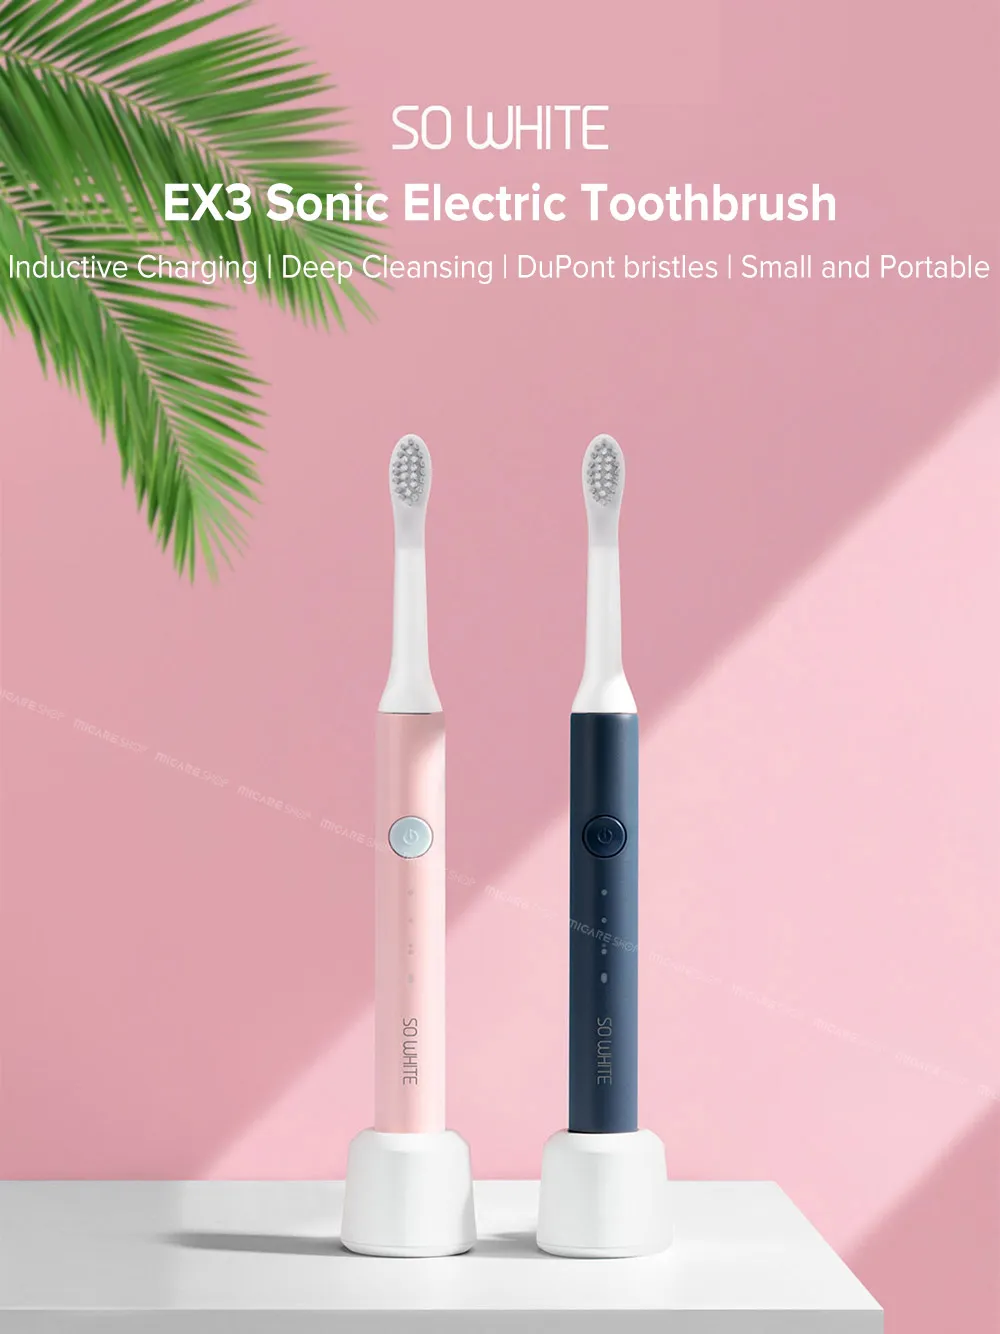 SOOCASソニック電動歯ブラシ超音波自動歯磨きブラシ防水クリーニングUSB充電式SO白ex3ピンジング